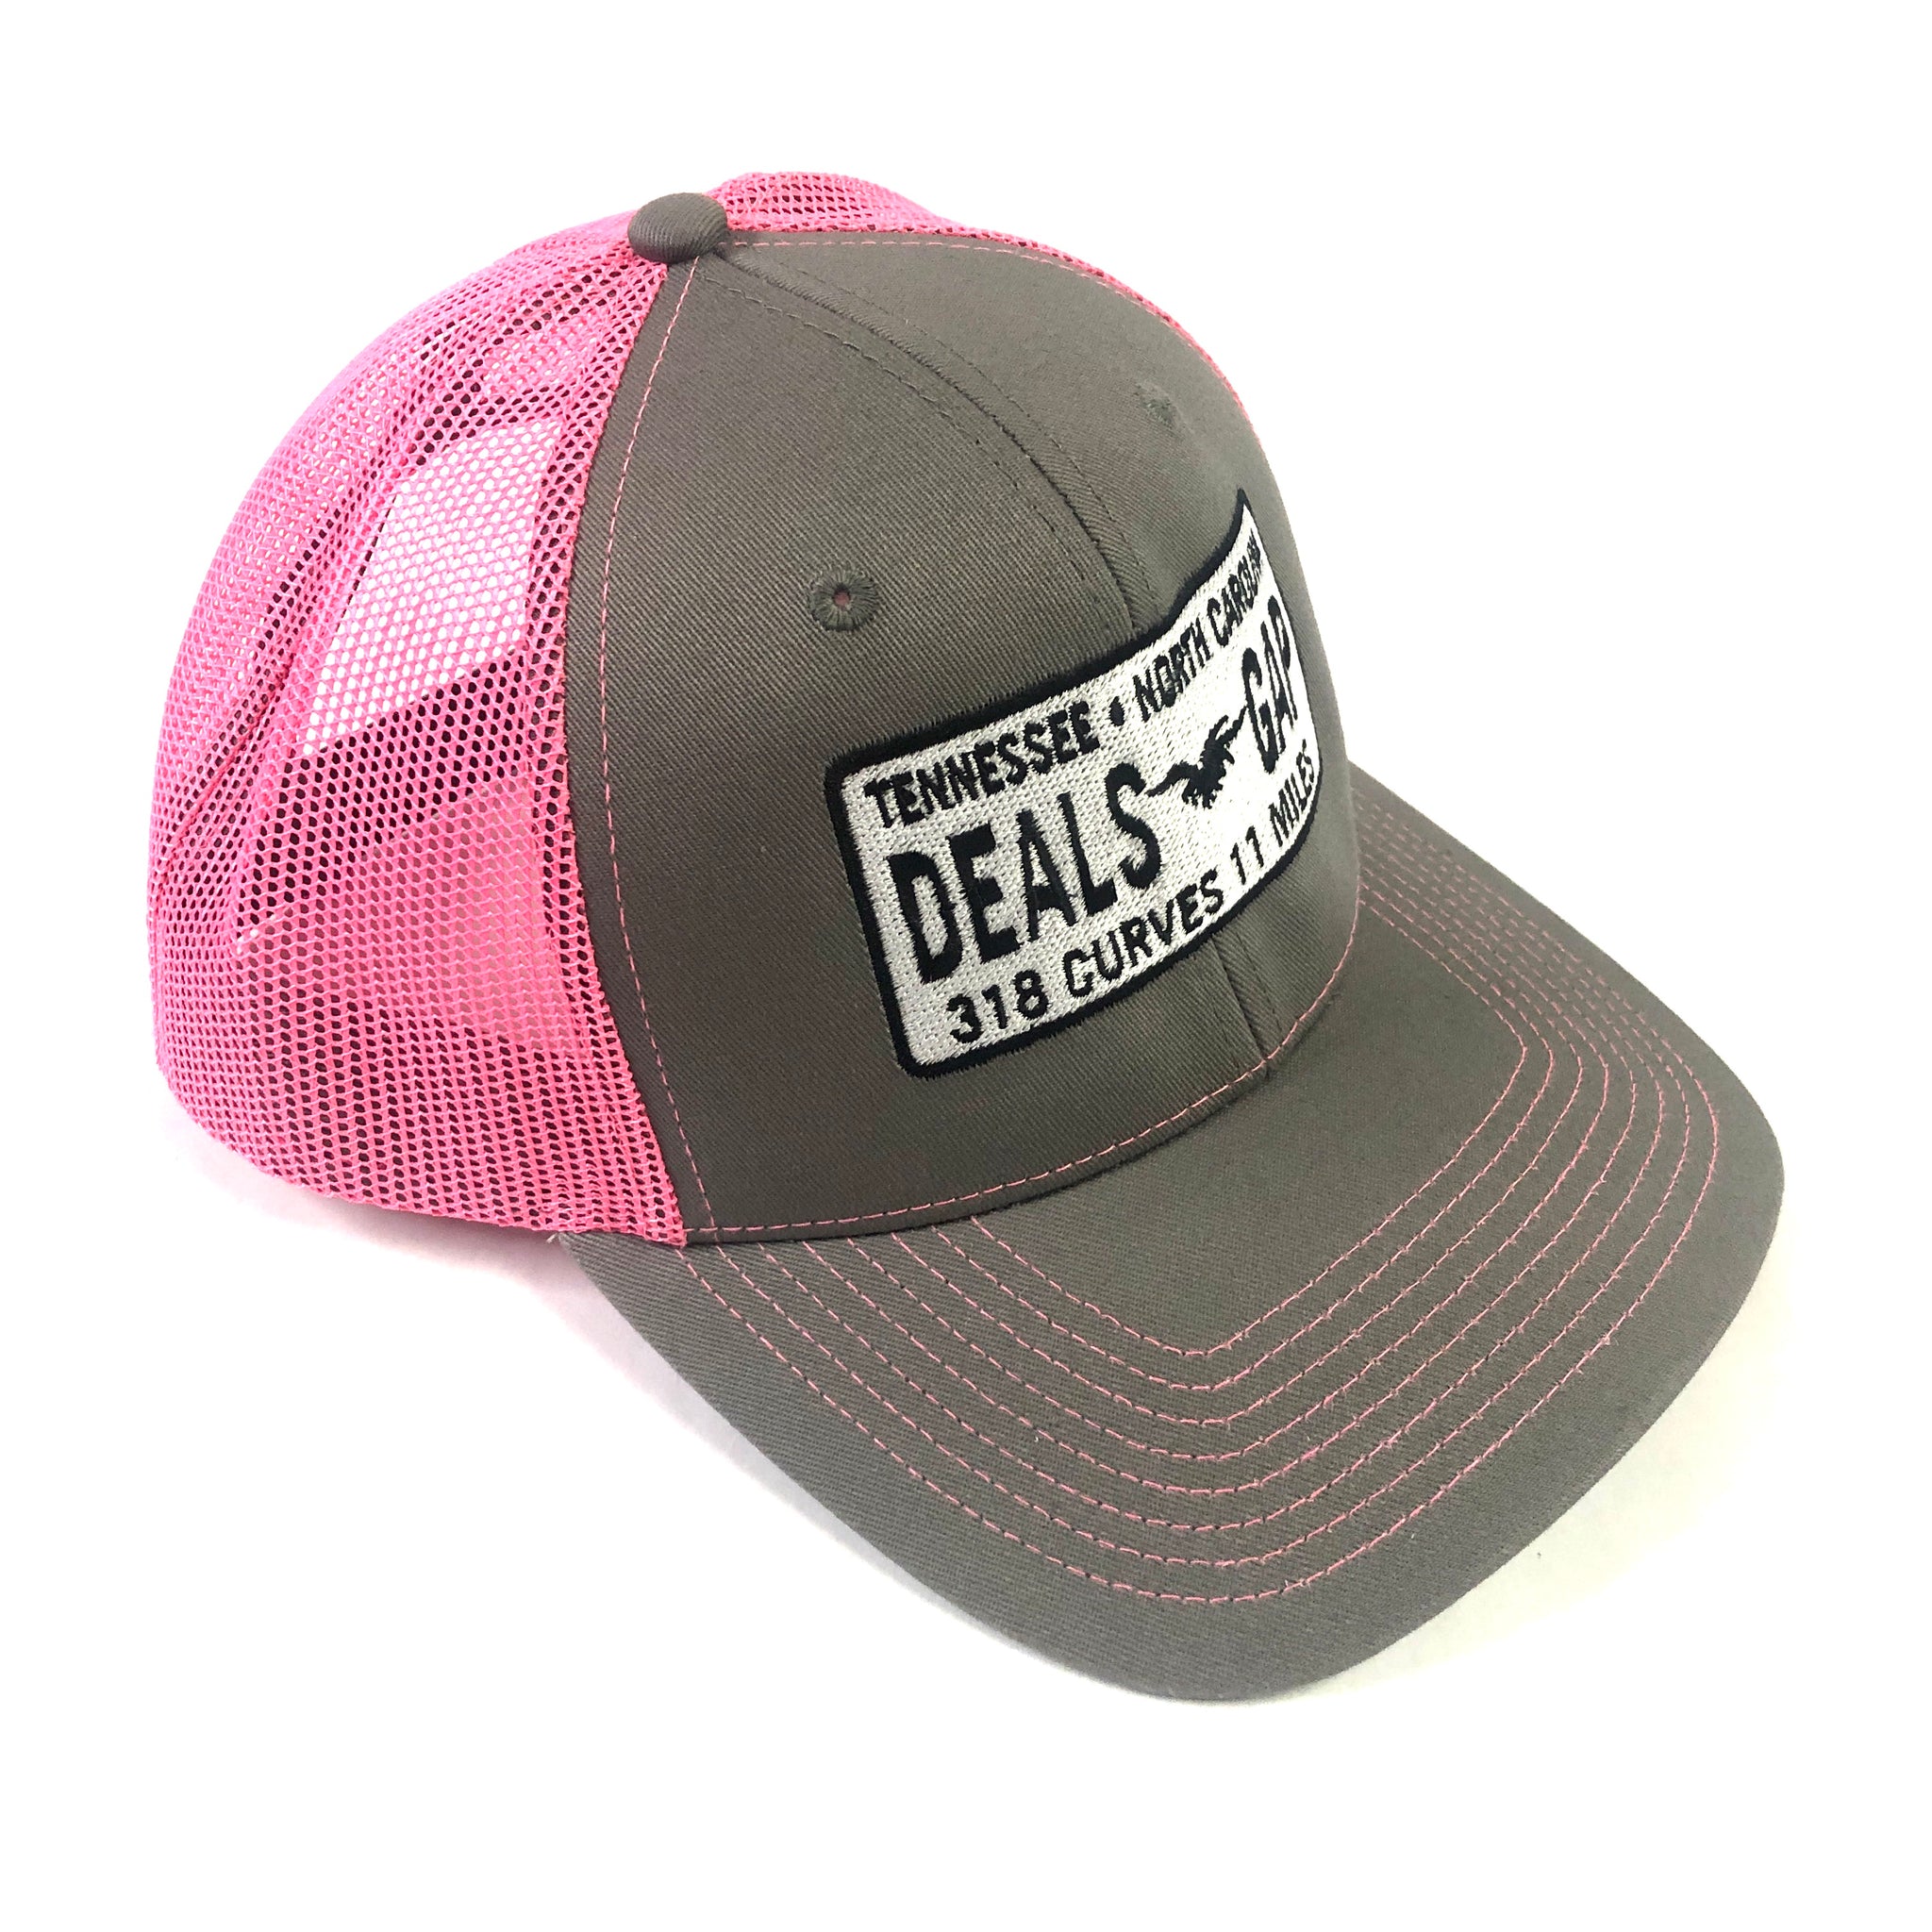 Pink / Gray Trucker hat